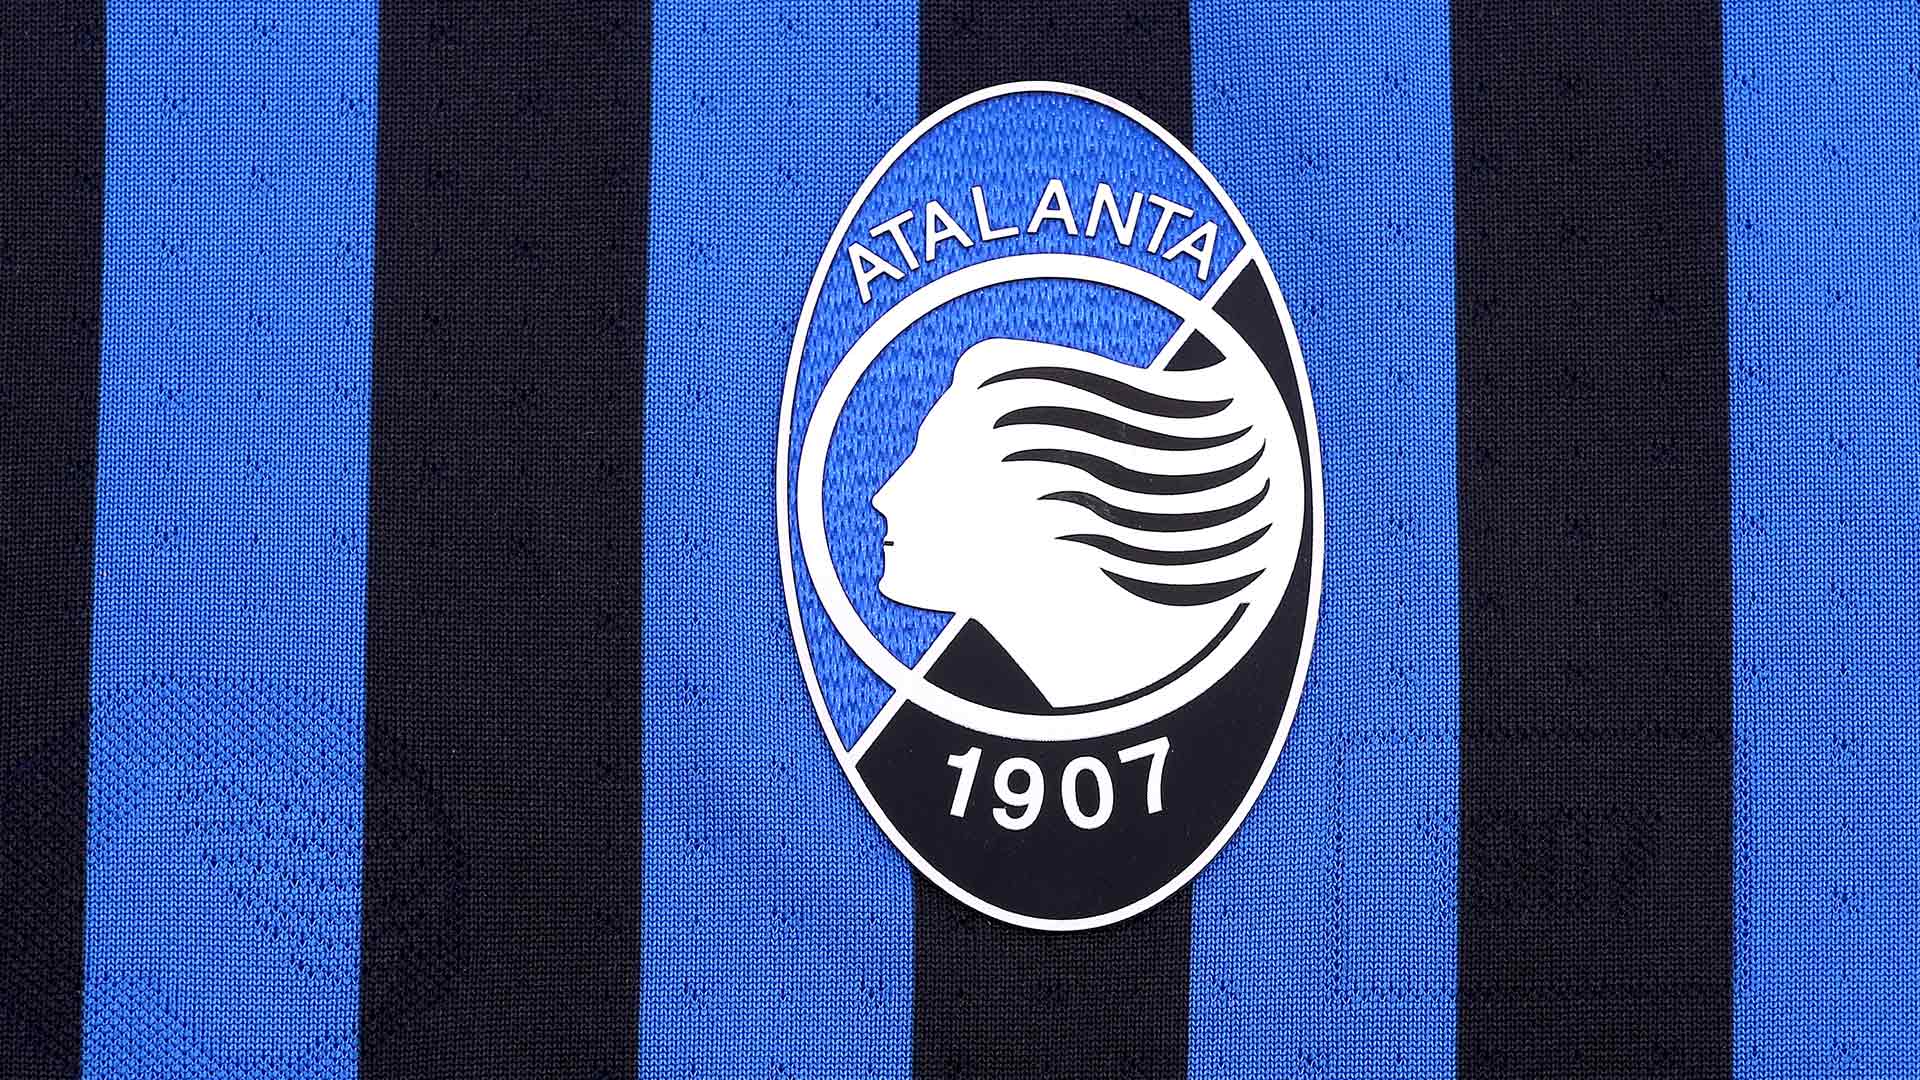 Atalanta - All information about atalanta bc (serie a) current squad